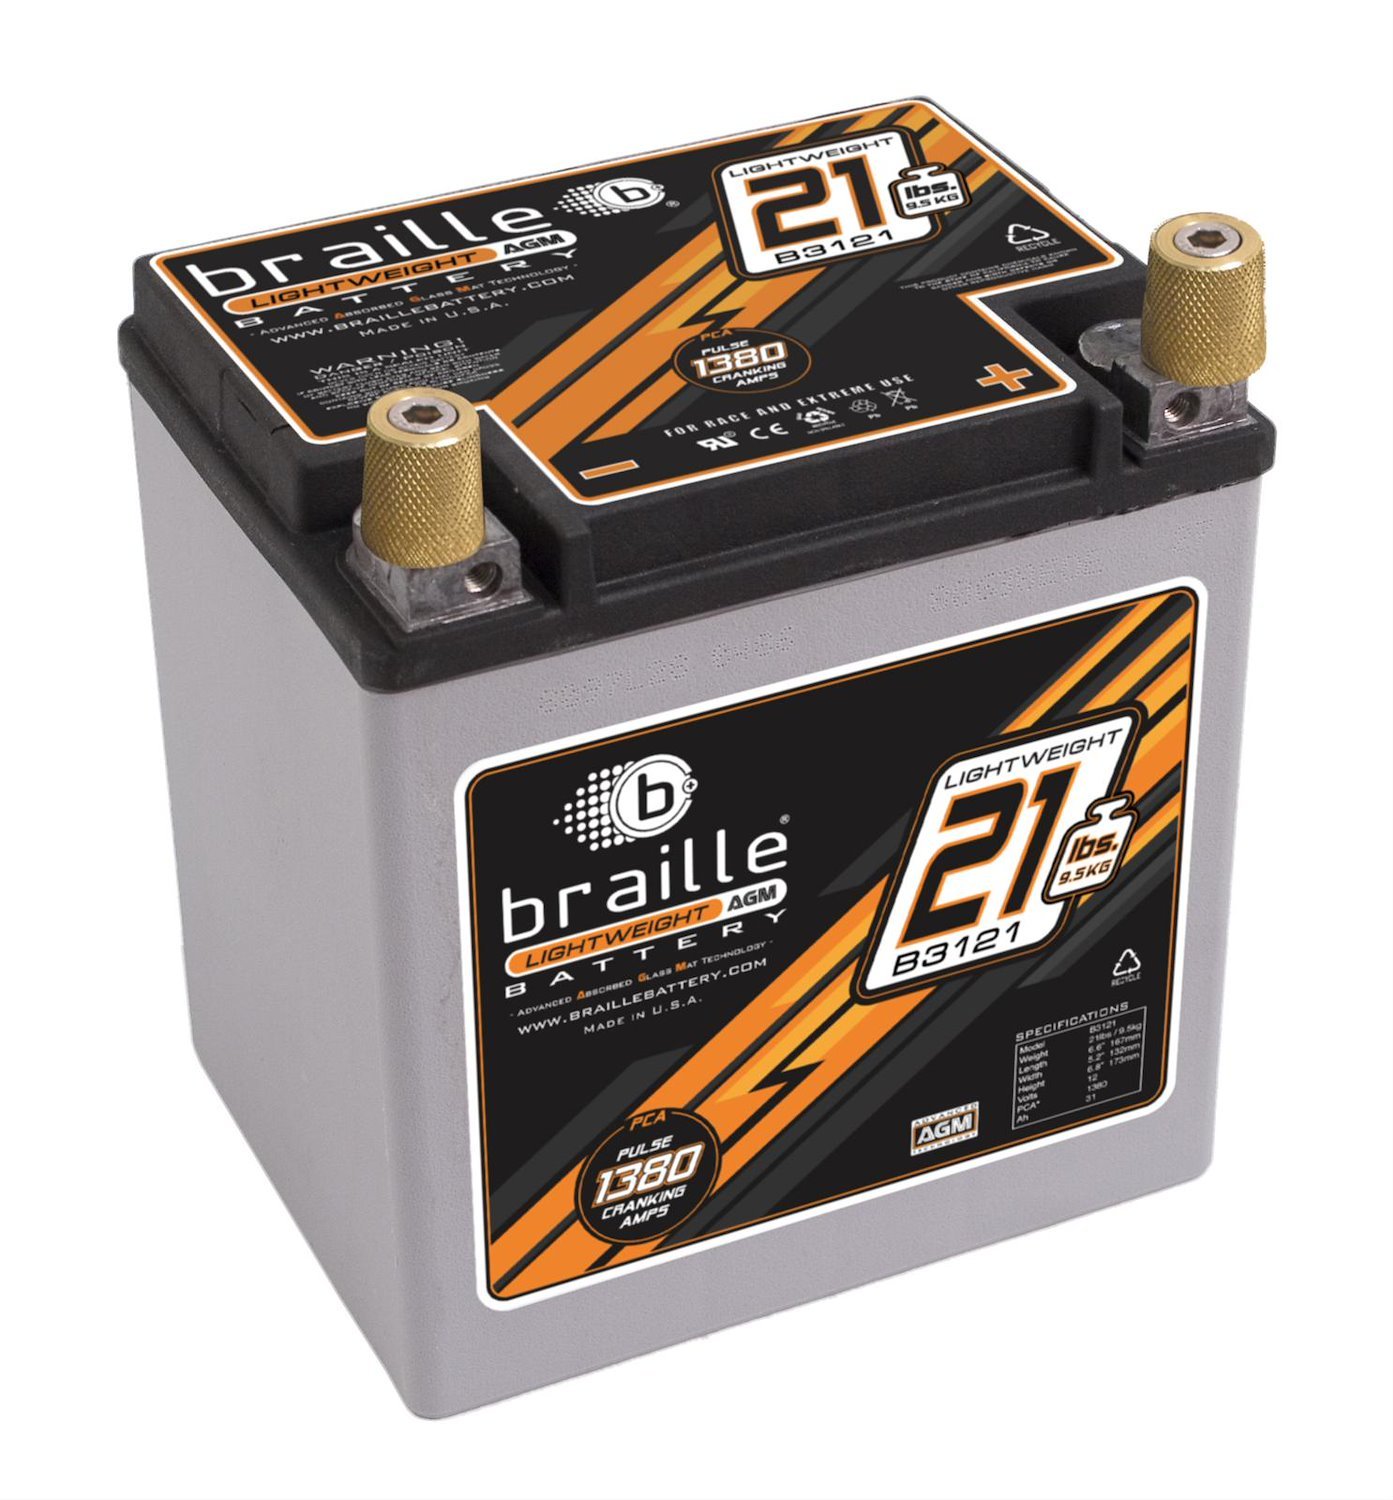 Braille Battery B3121: Advanced AGM Lightweight Racing Battery 21 lbs - JEGS